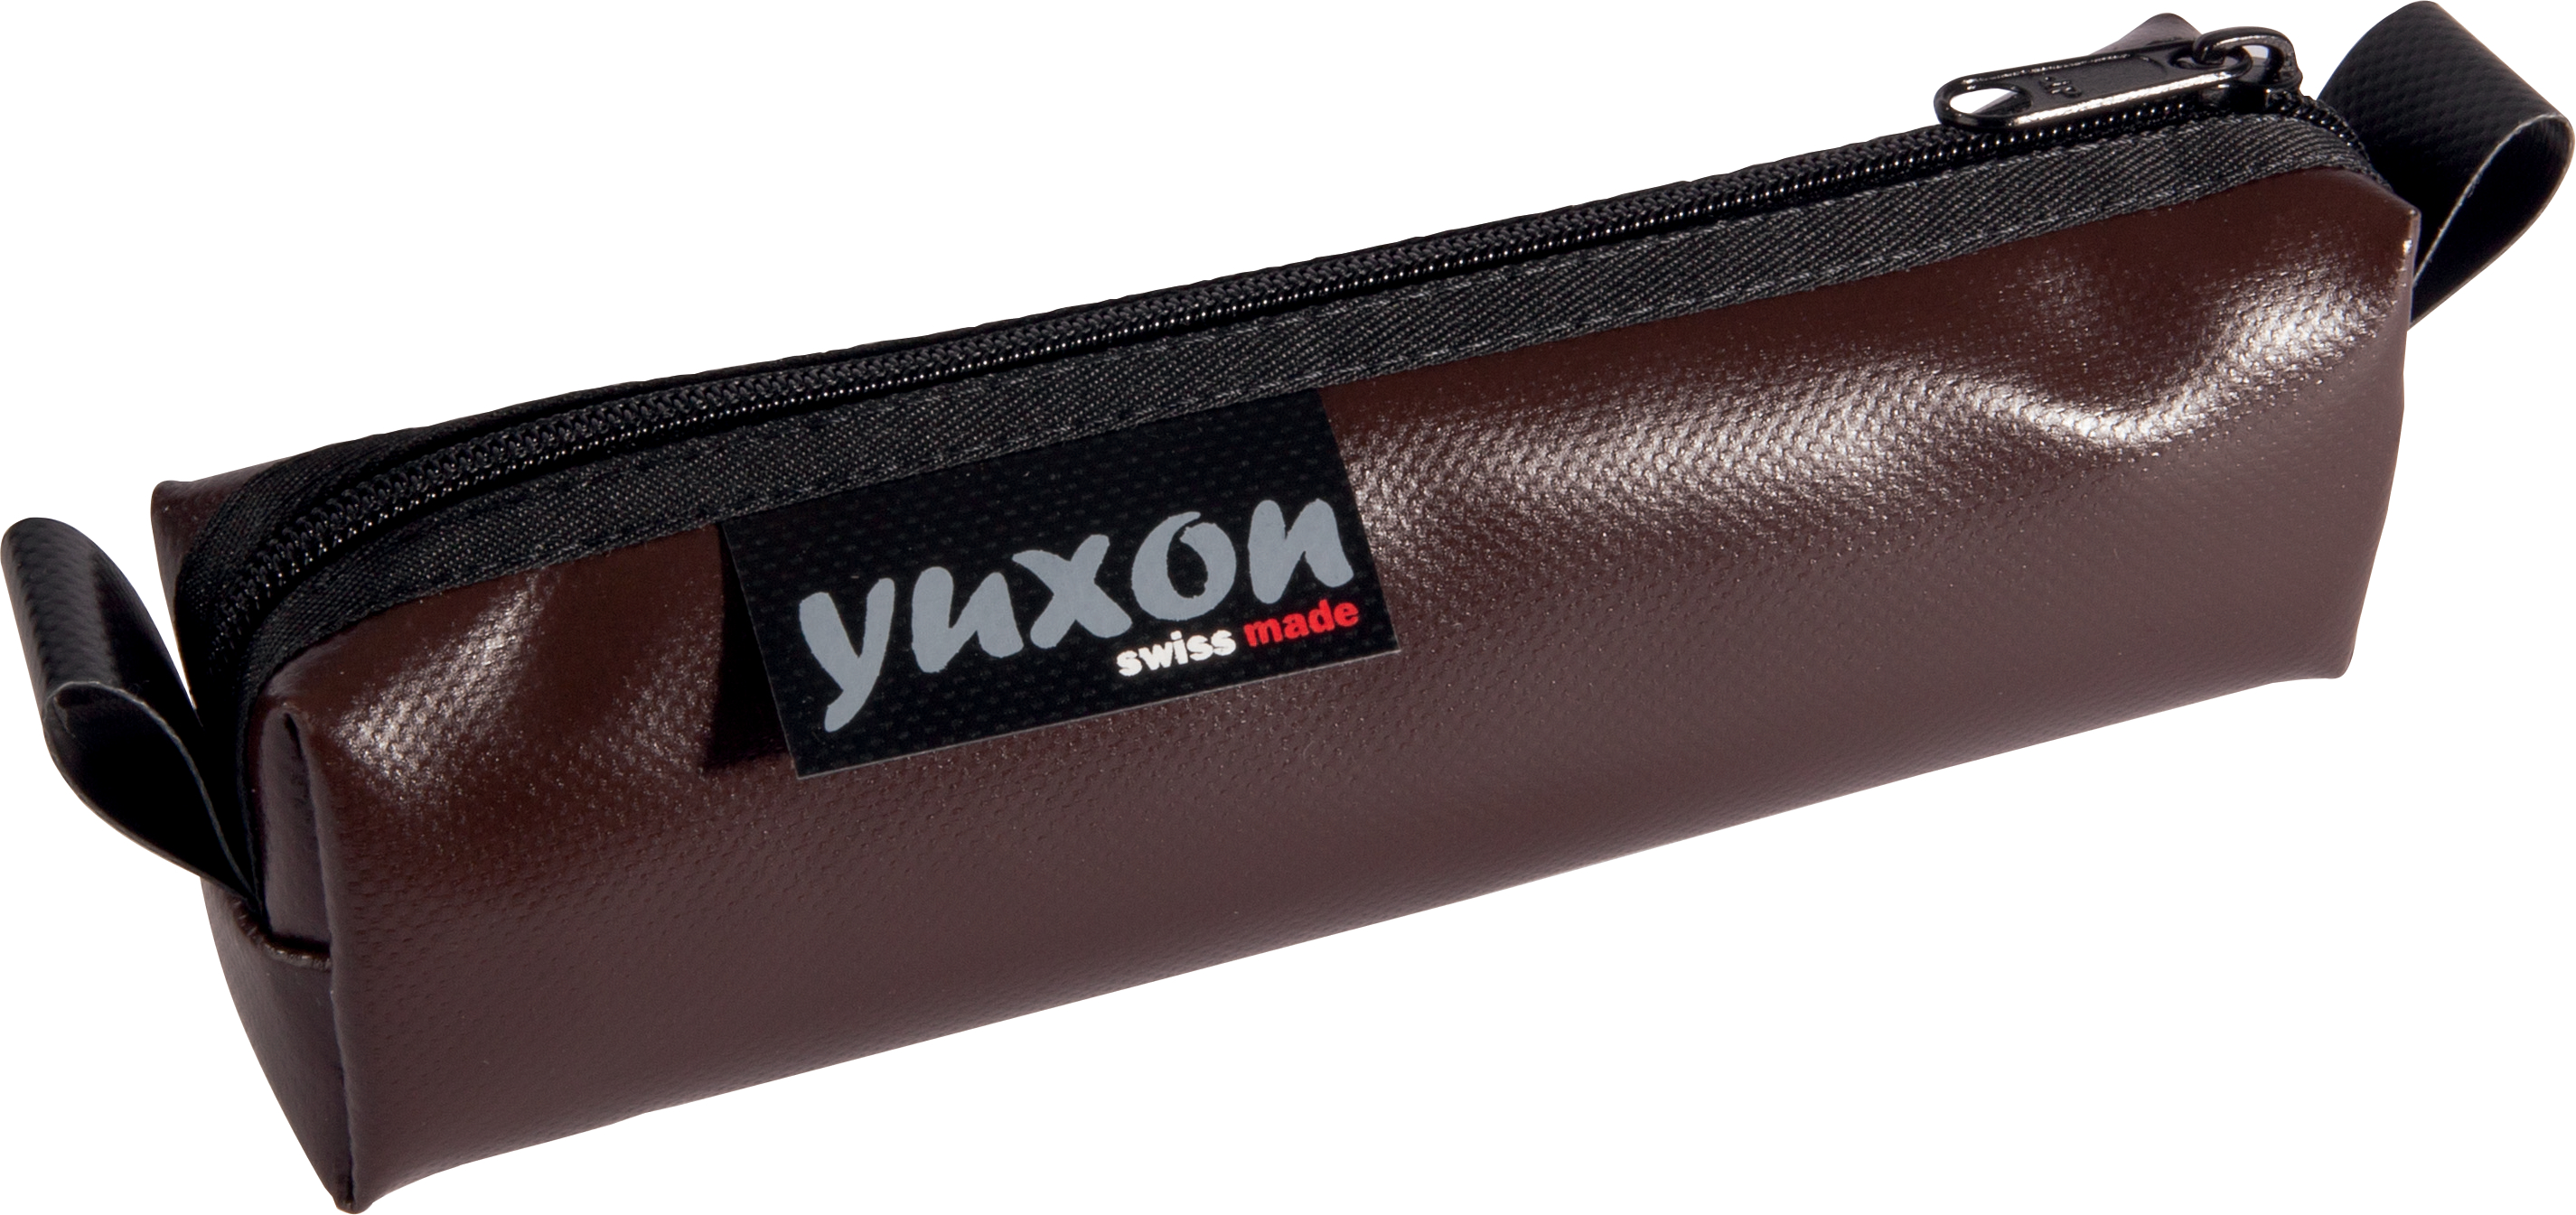 YUXON Trousse Midi 8910.16 brun brun